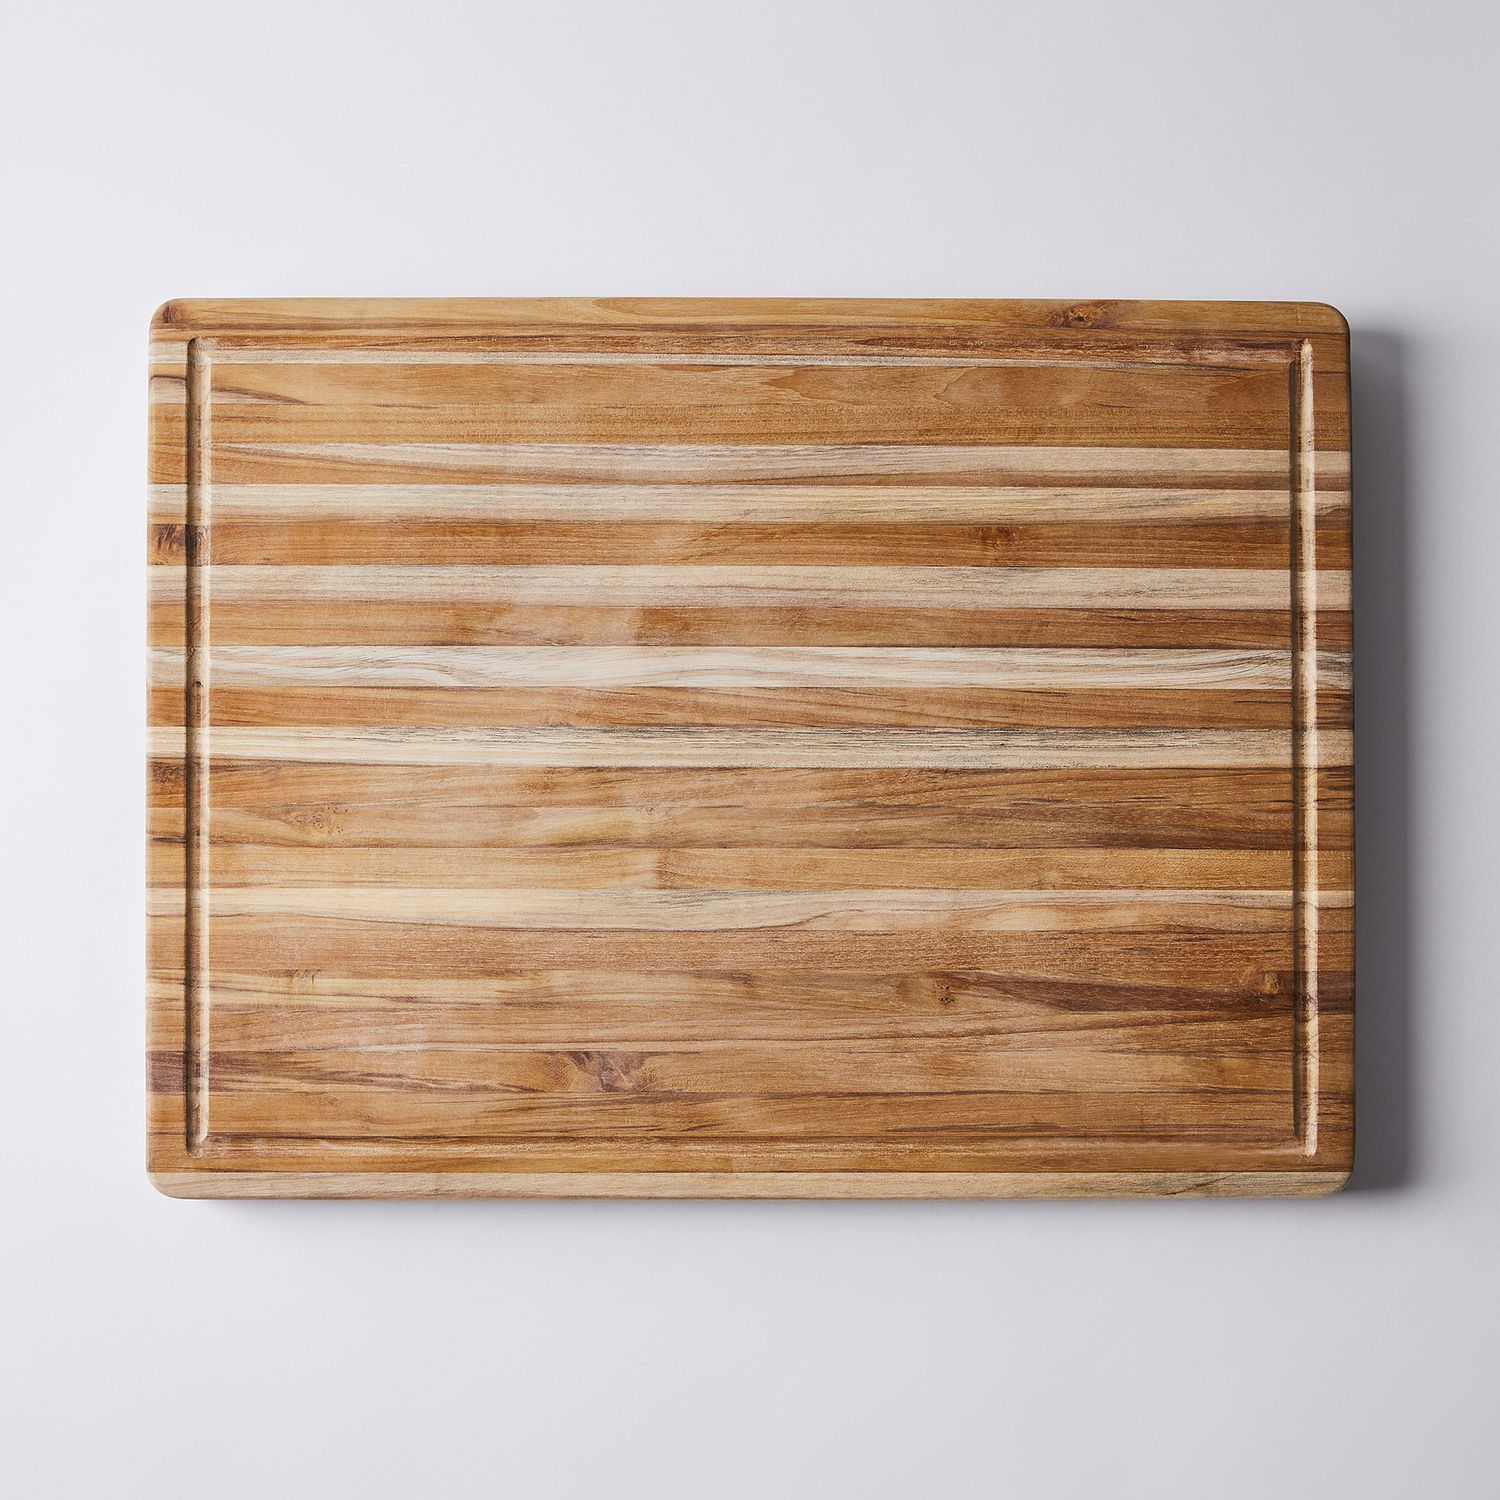 Edge Grain Cutting Board, by Teakhaus; 3 sizes